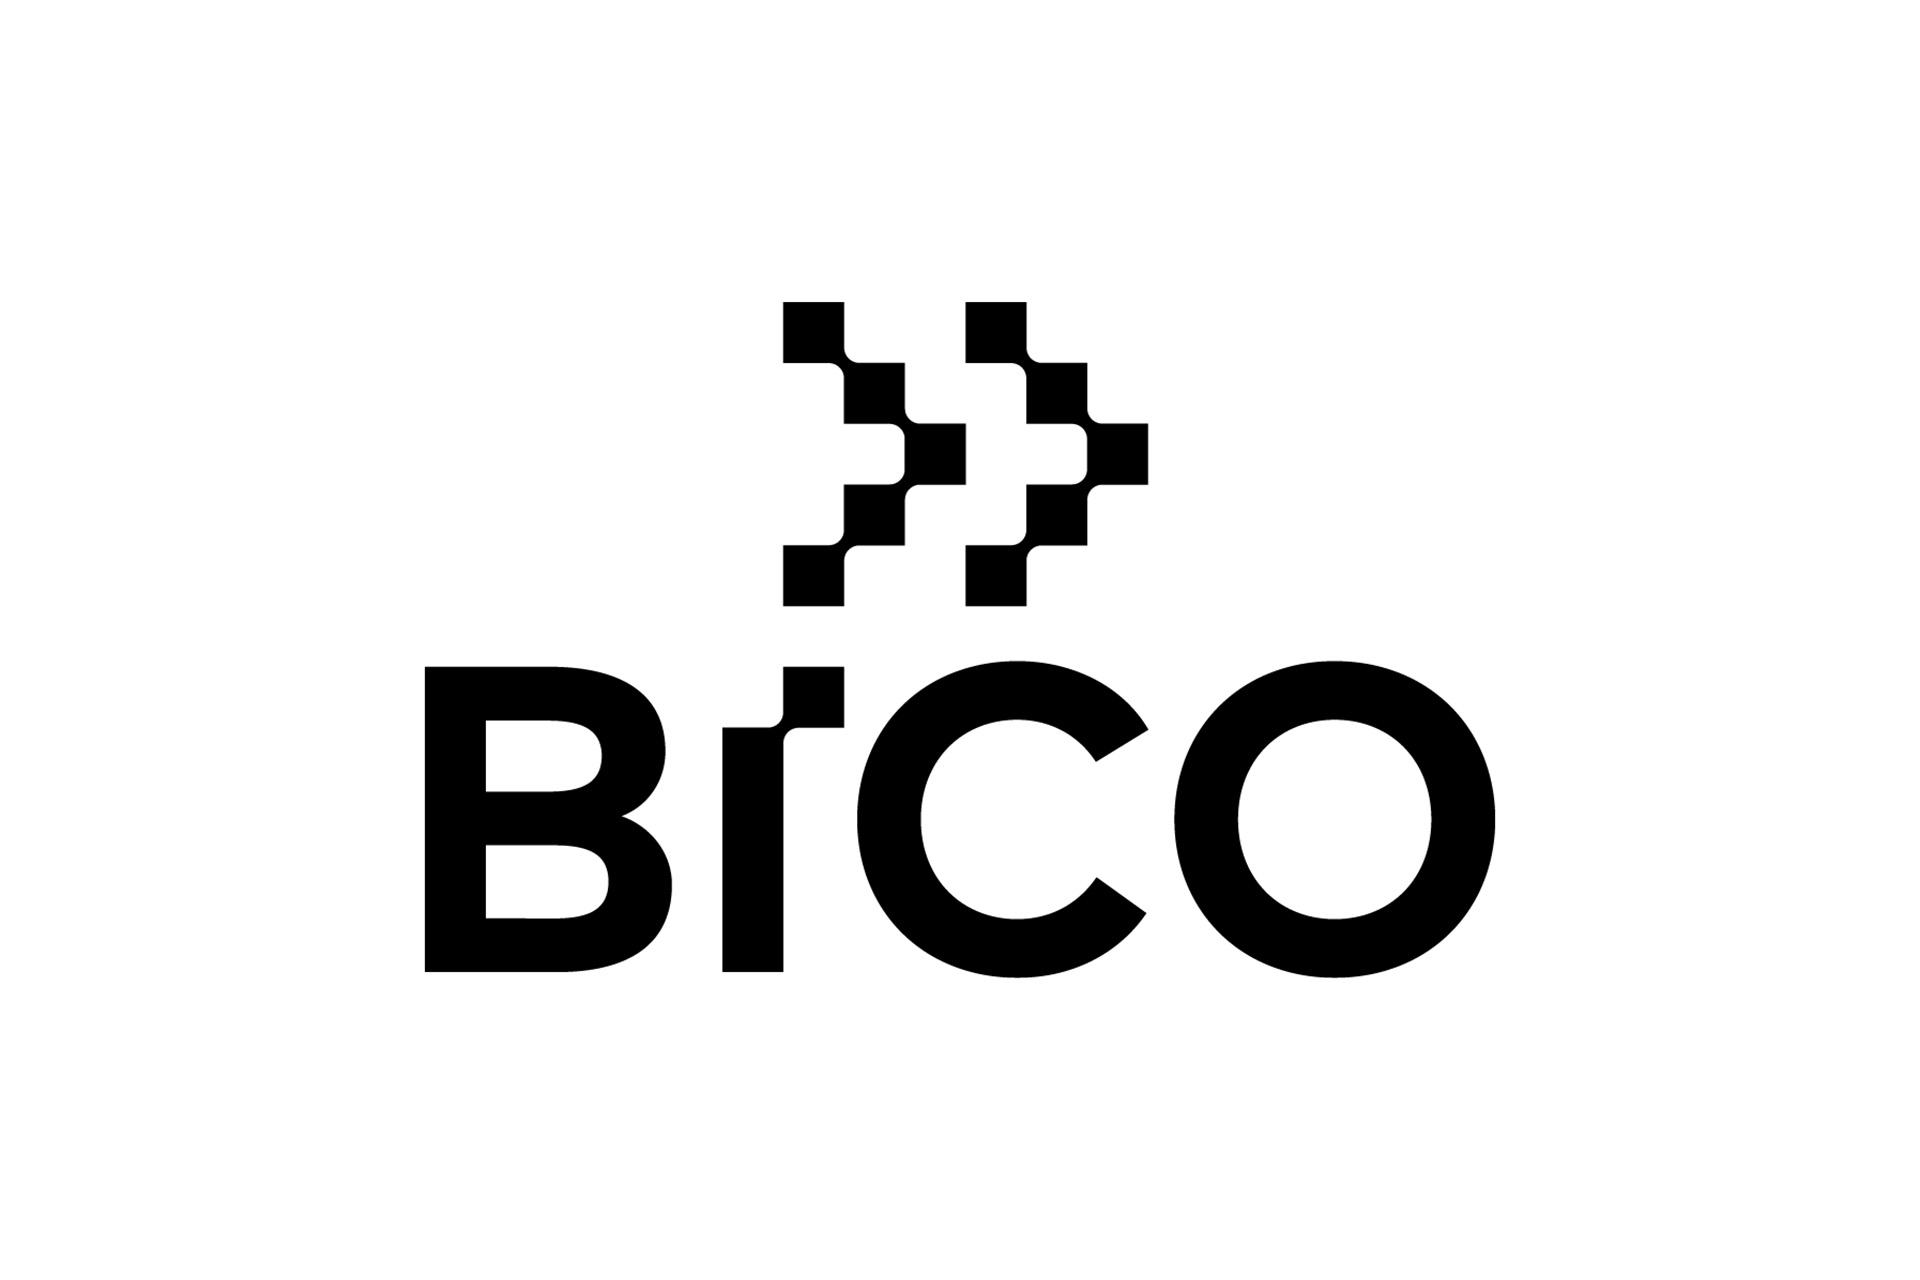 BICO logotype